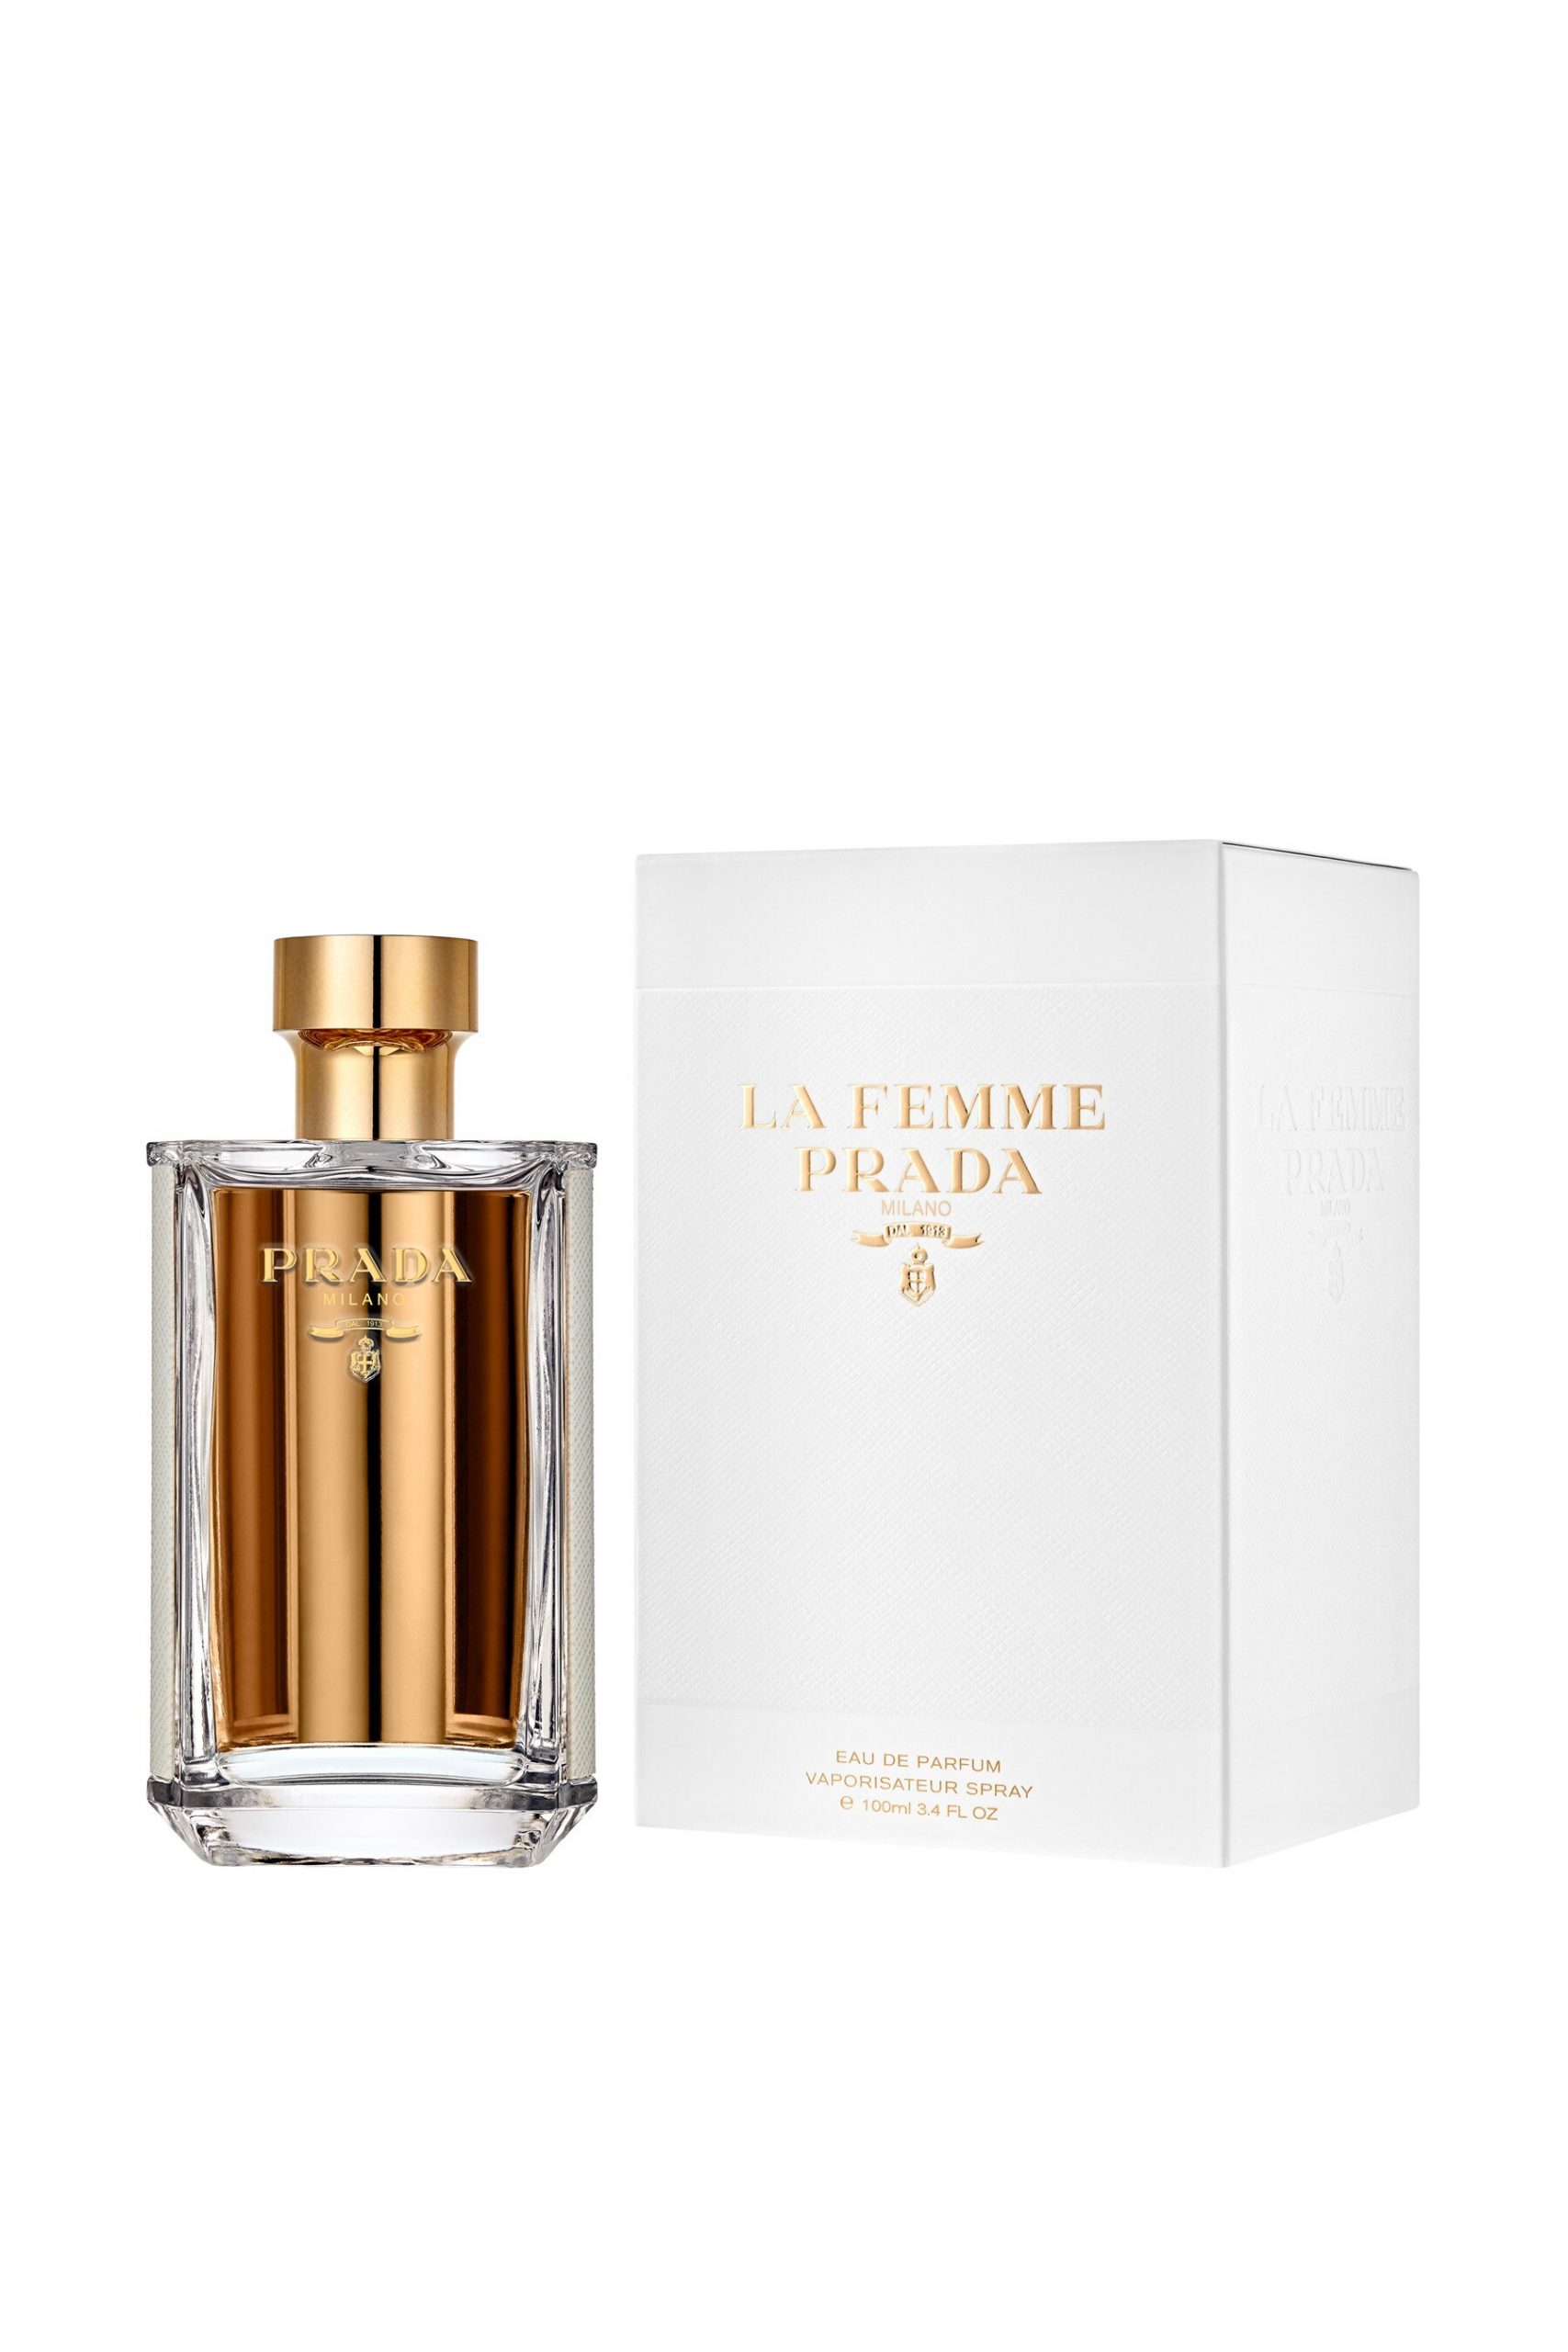 Dokter getuige bespotten Shop now and save 57% on your purchase at salesperfume.com during the Prada  La Femme Eau de Parfum 100% Guarantee sale